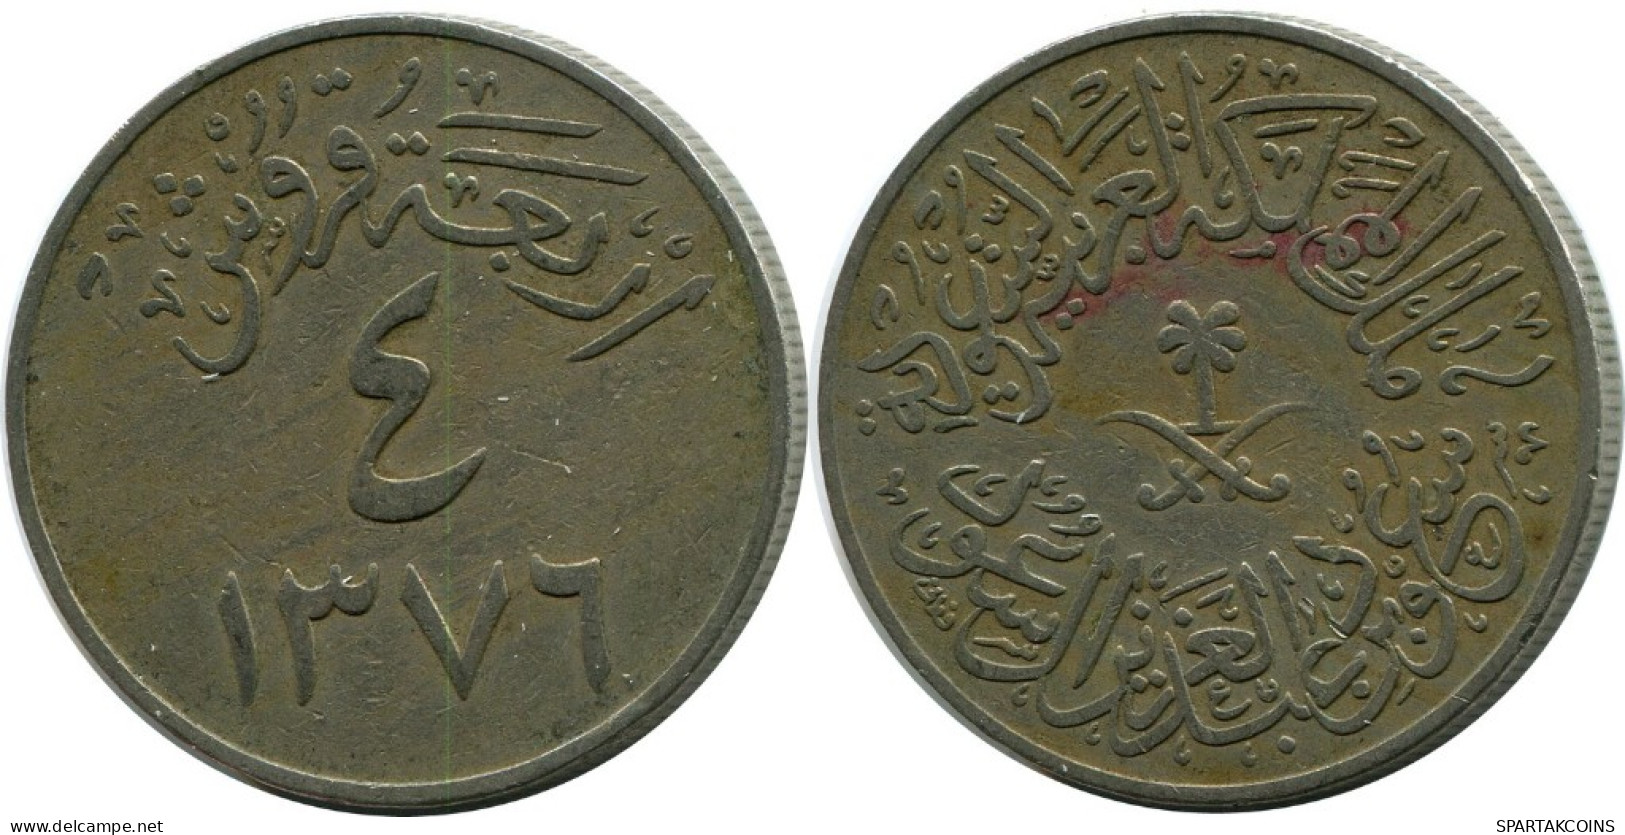 4 GHIRSH 1956 SAUDI ARABIA Islamic Coin #AK092.U.A - Saudi-Arabien